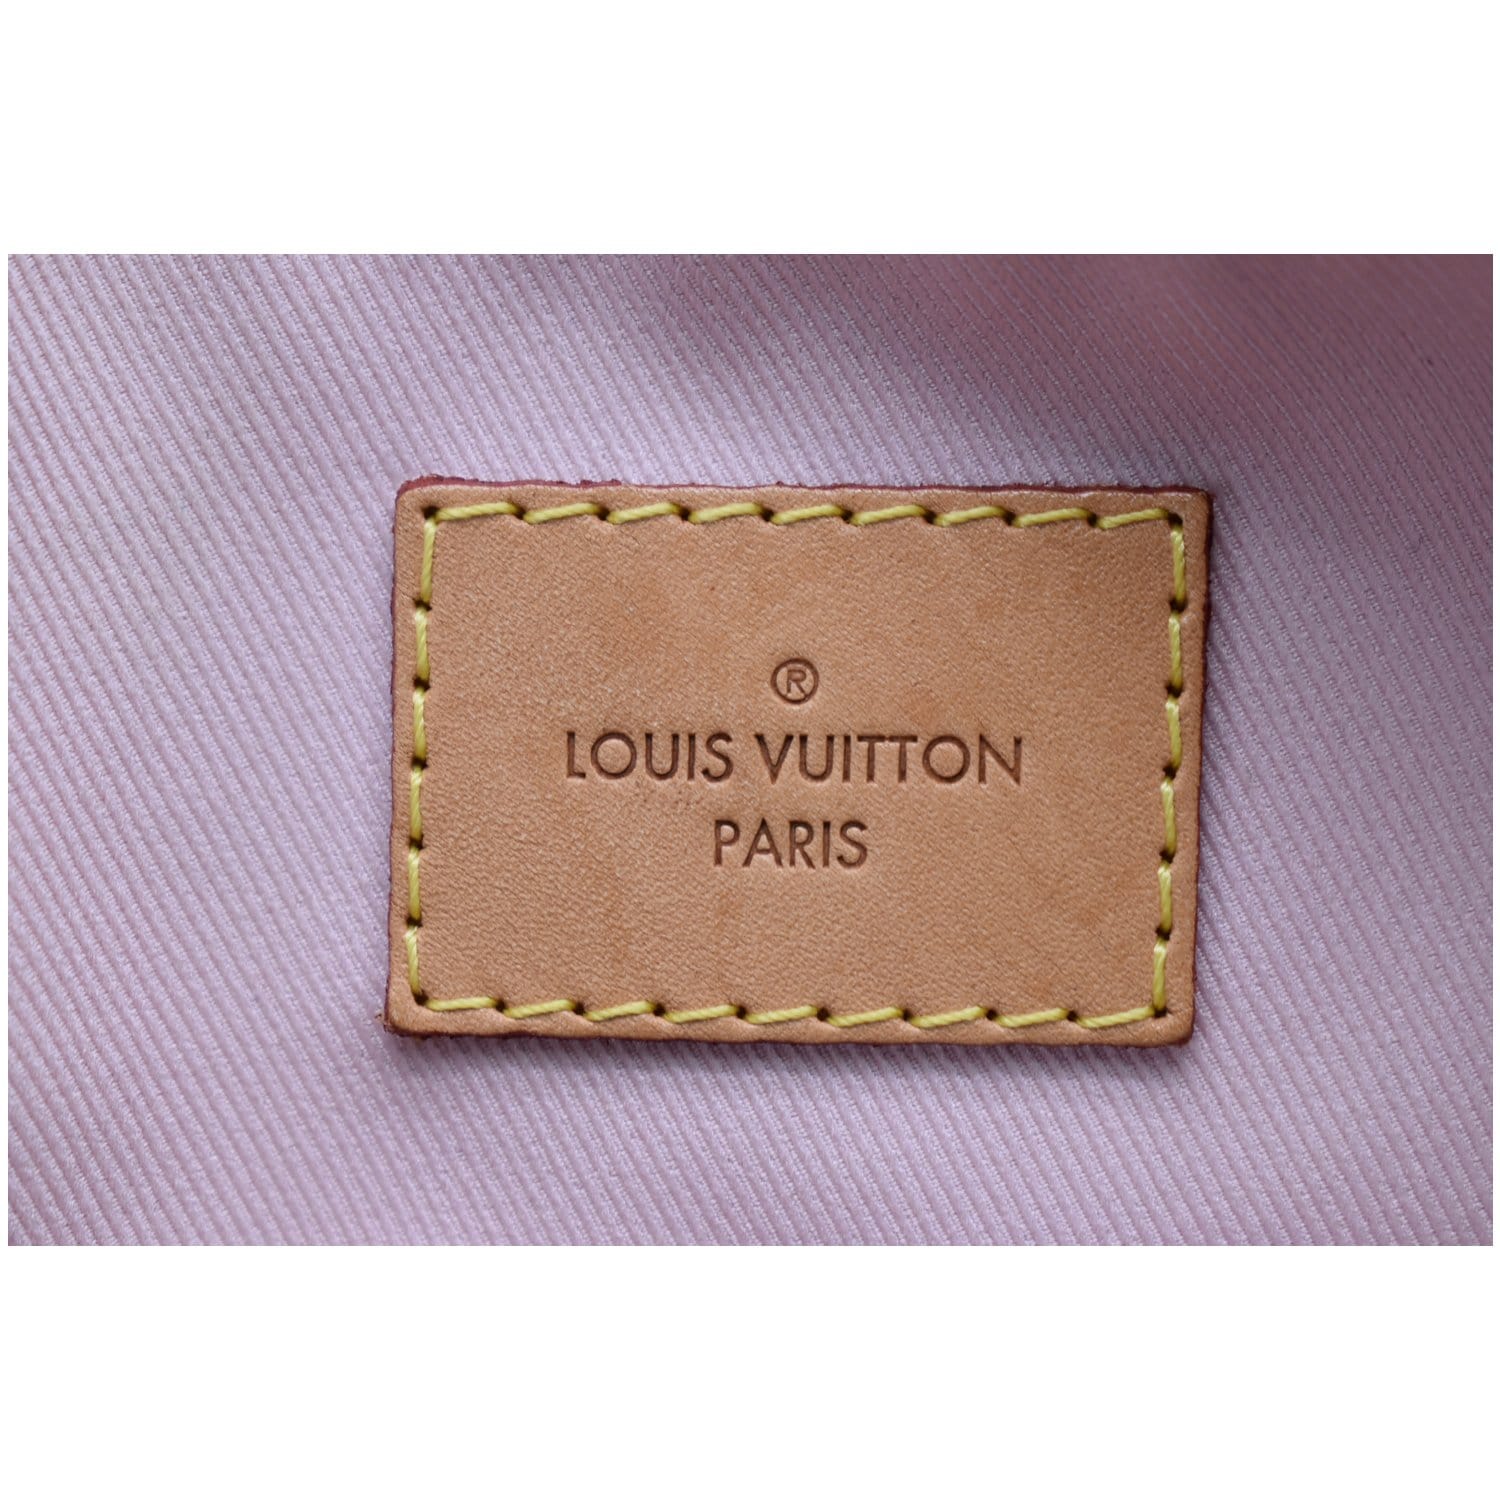 Louis Vuitton Lymington Bag, Bragmybag